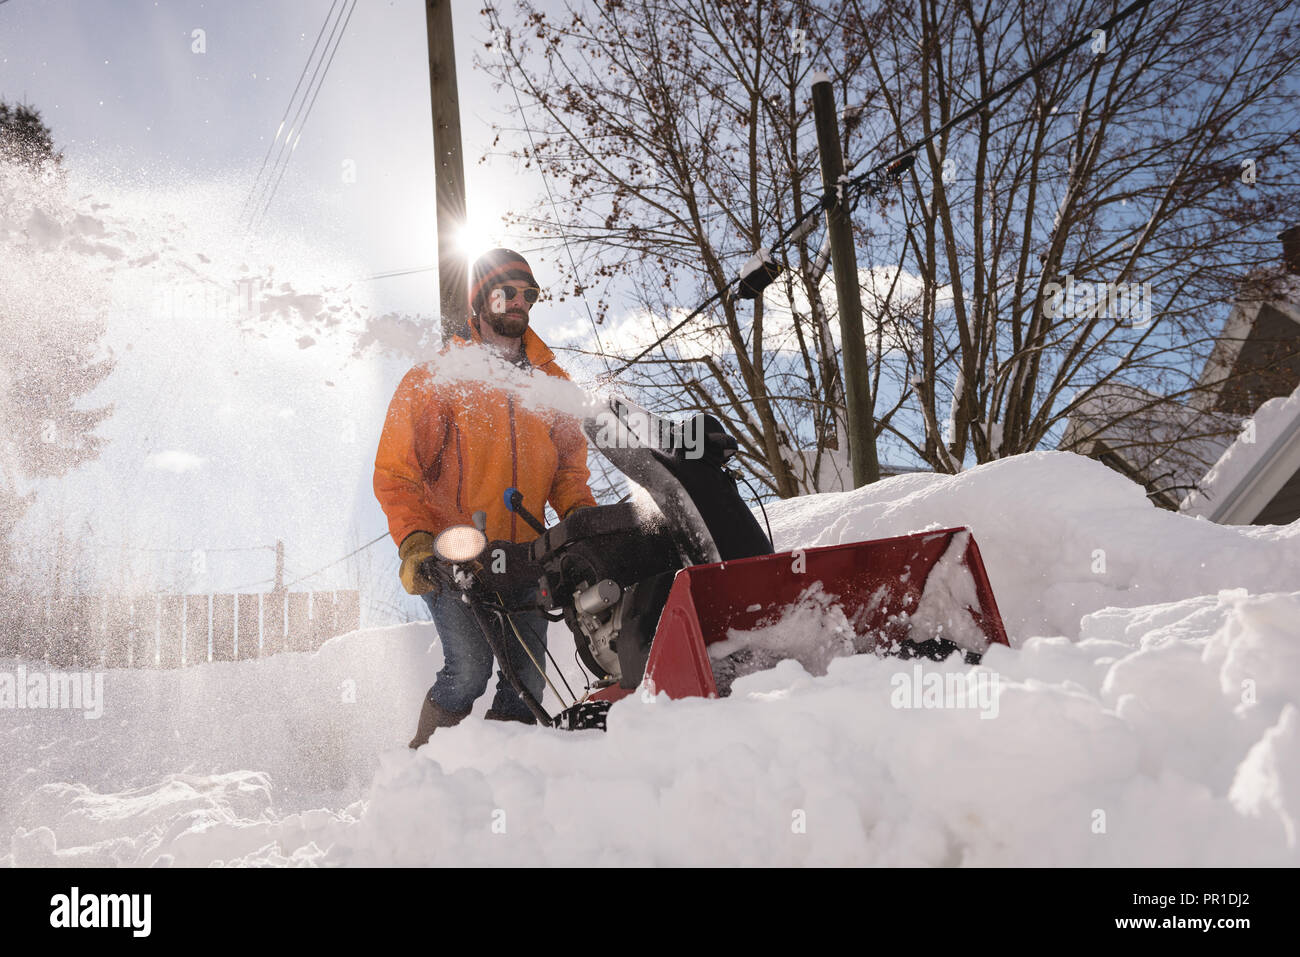 Man using snow blower machine in snowy region Stock Photo